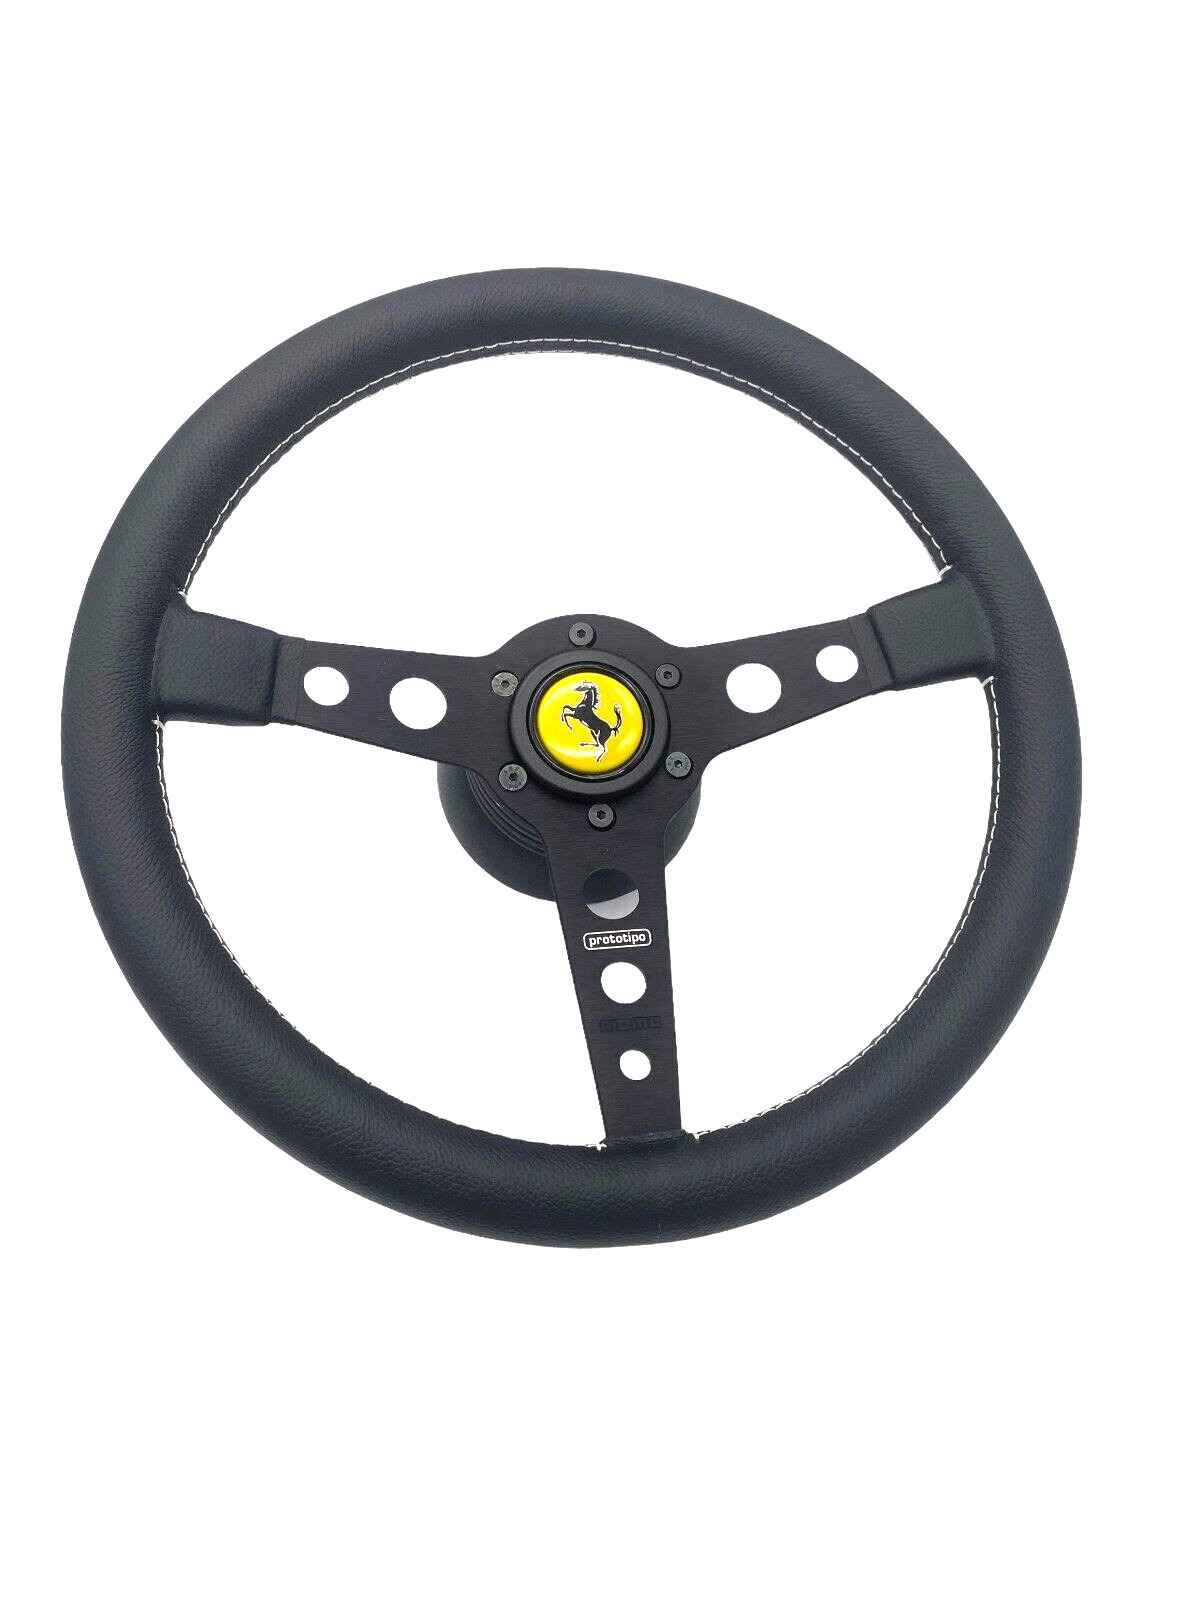 Ferrari F355 MOMO Prototipo Leather Steering Wheel 350mm With Hub Kit